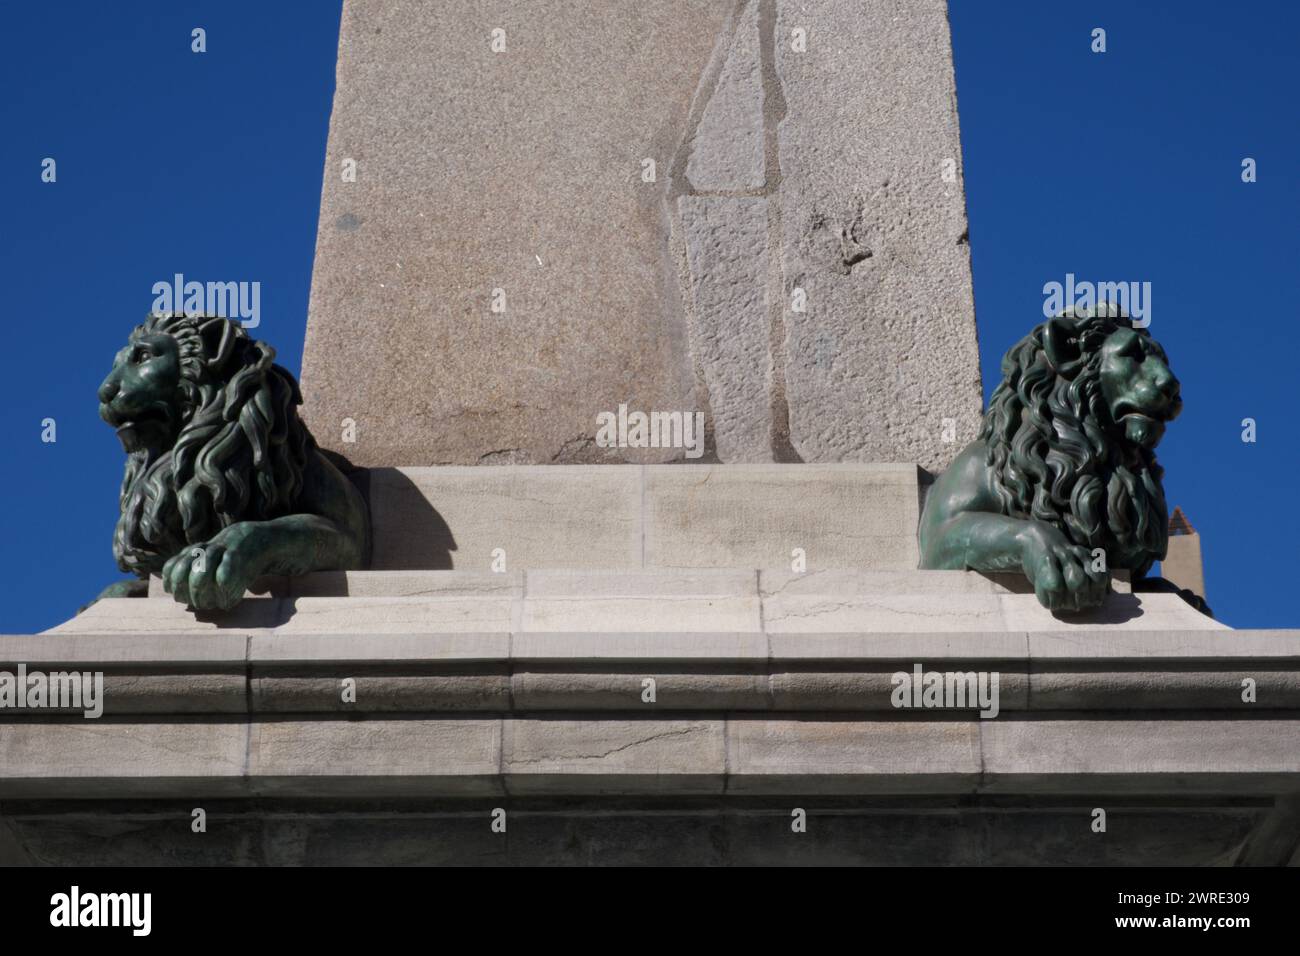 Löwenskulpturen auf dem Obelisken, Place de la République Arles France Stockfoto